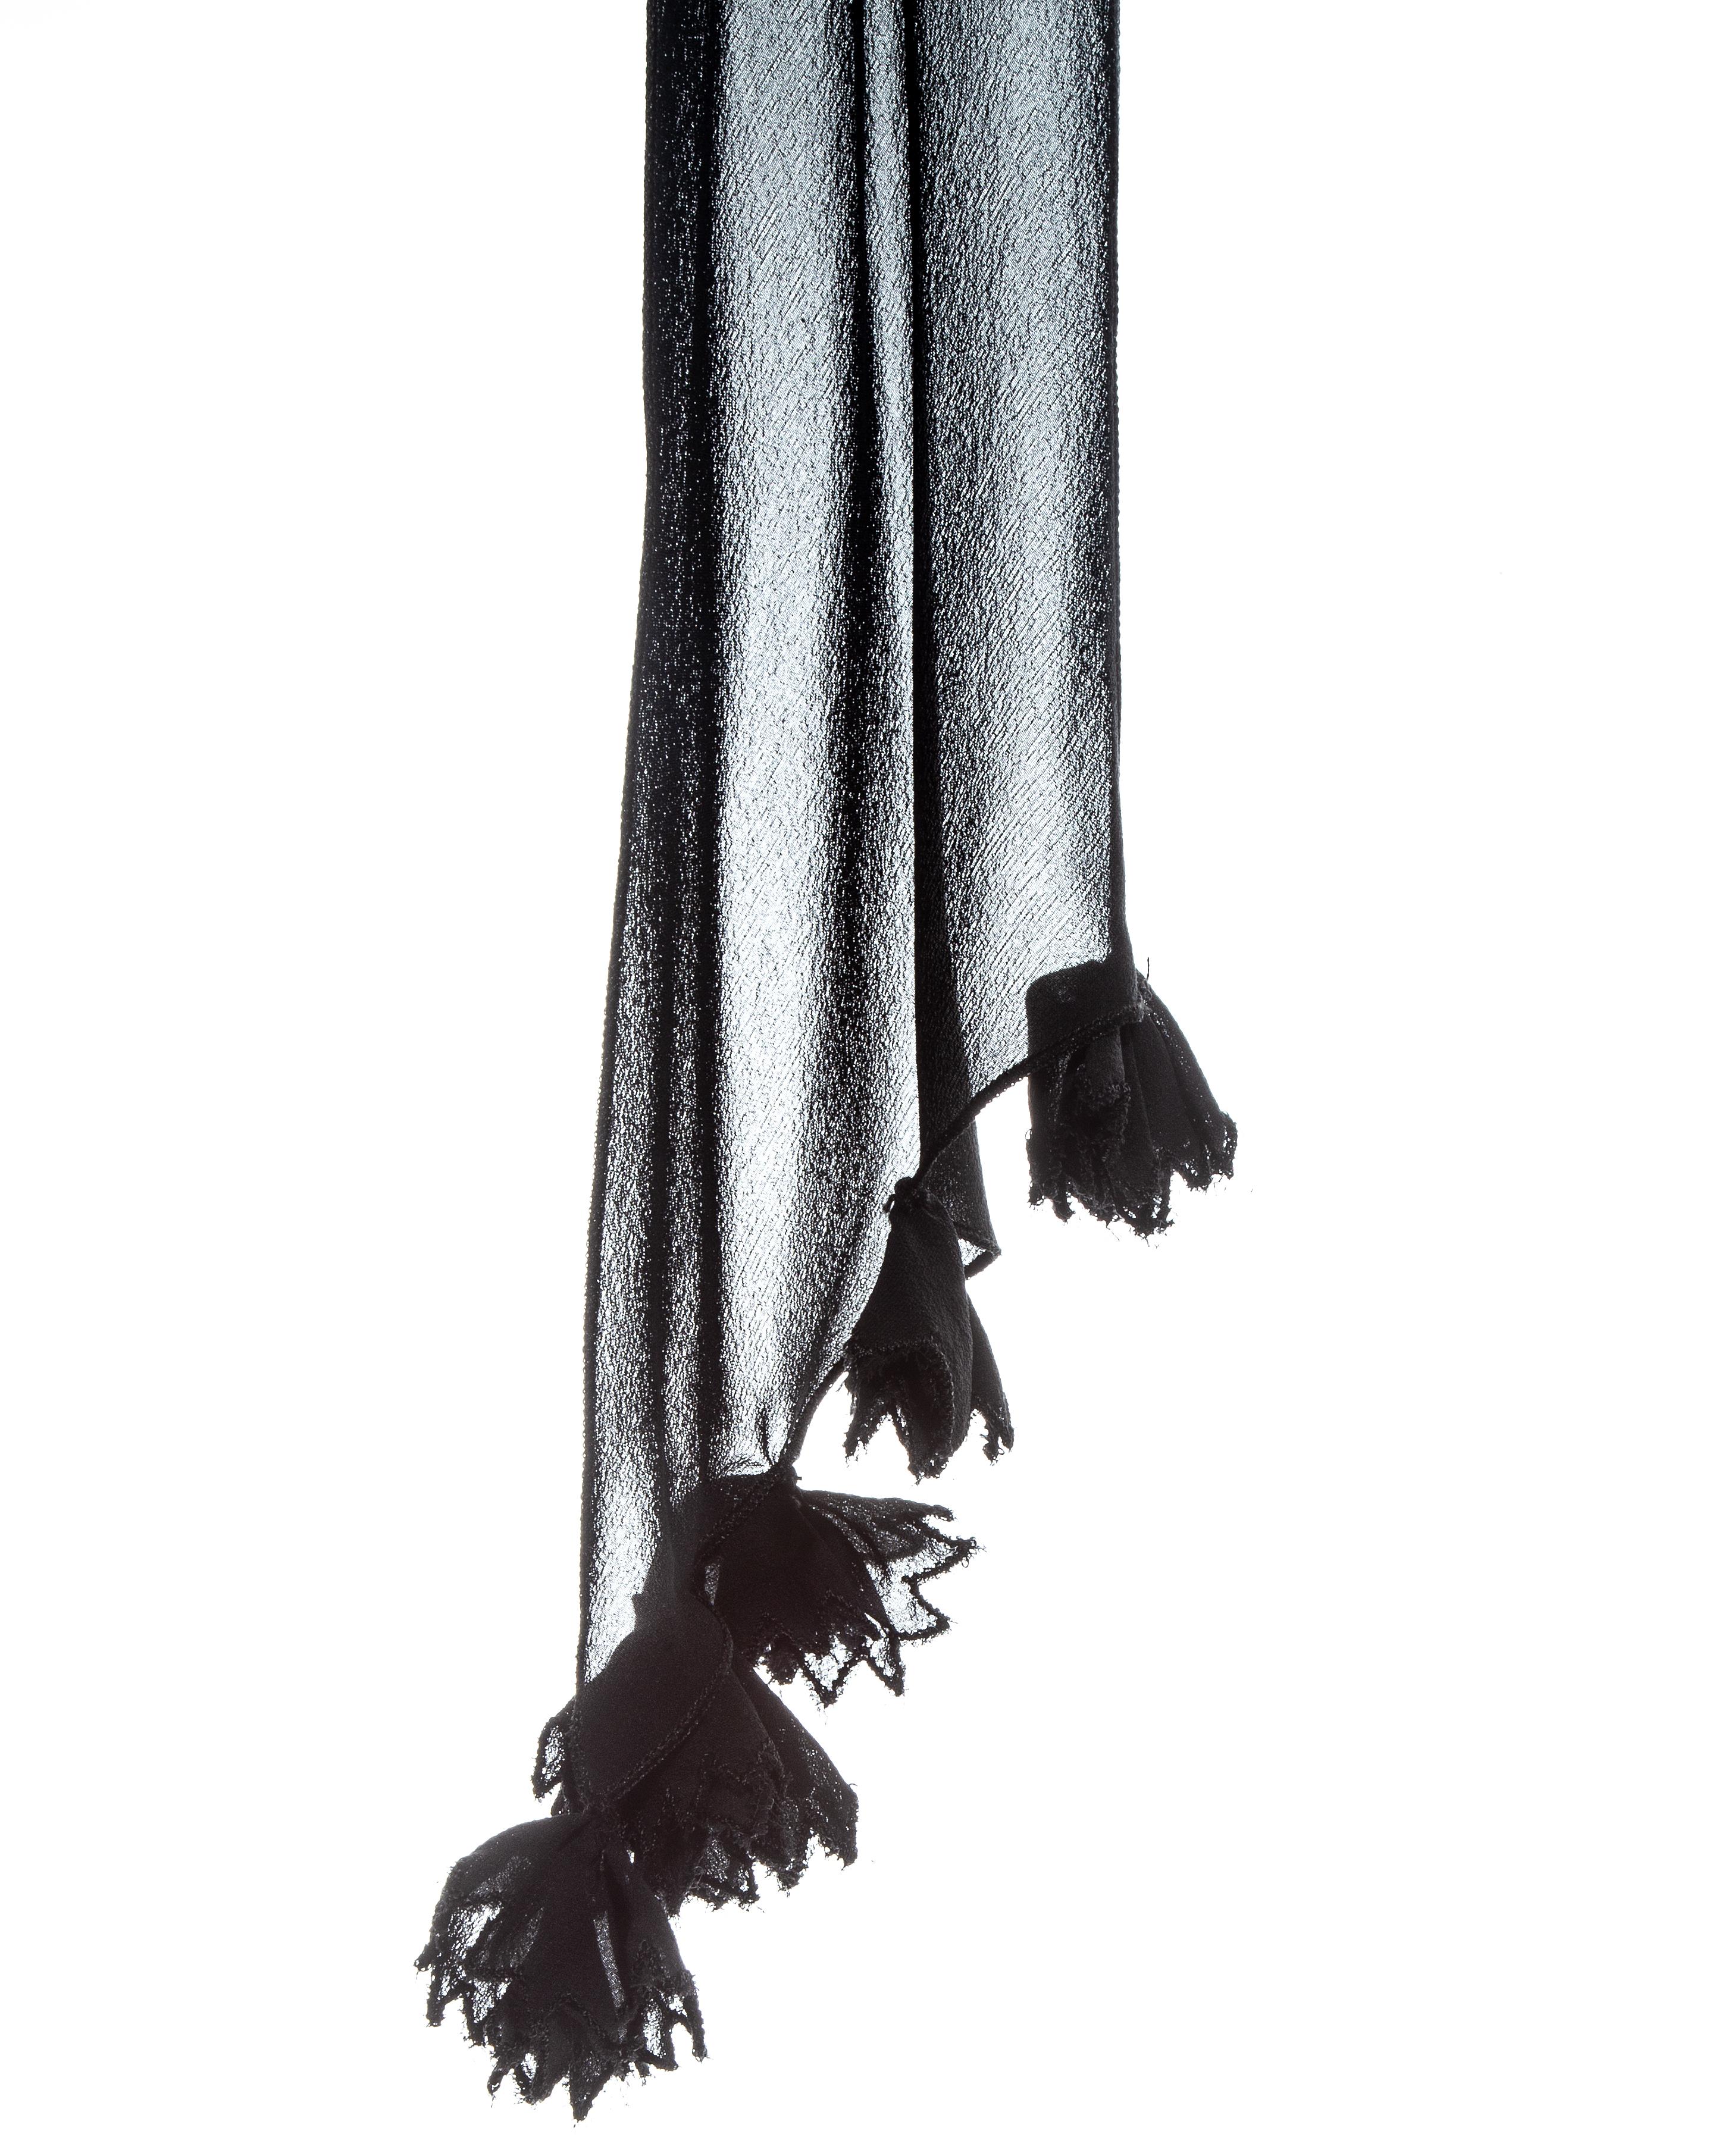 Women's John Galliano black acetate evening dress with attached chiffon scarf, ss 2001